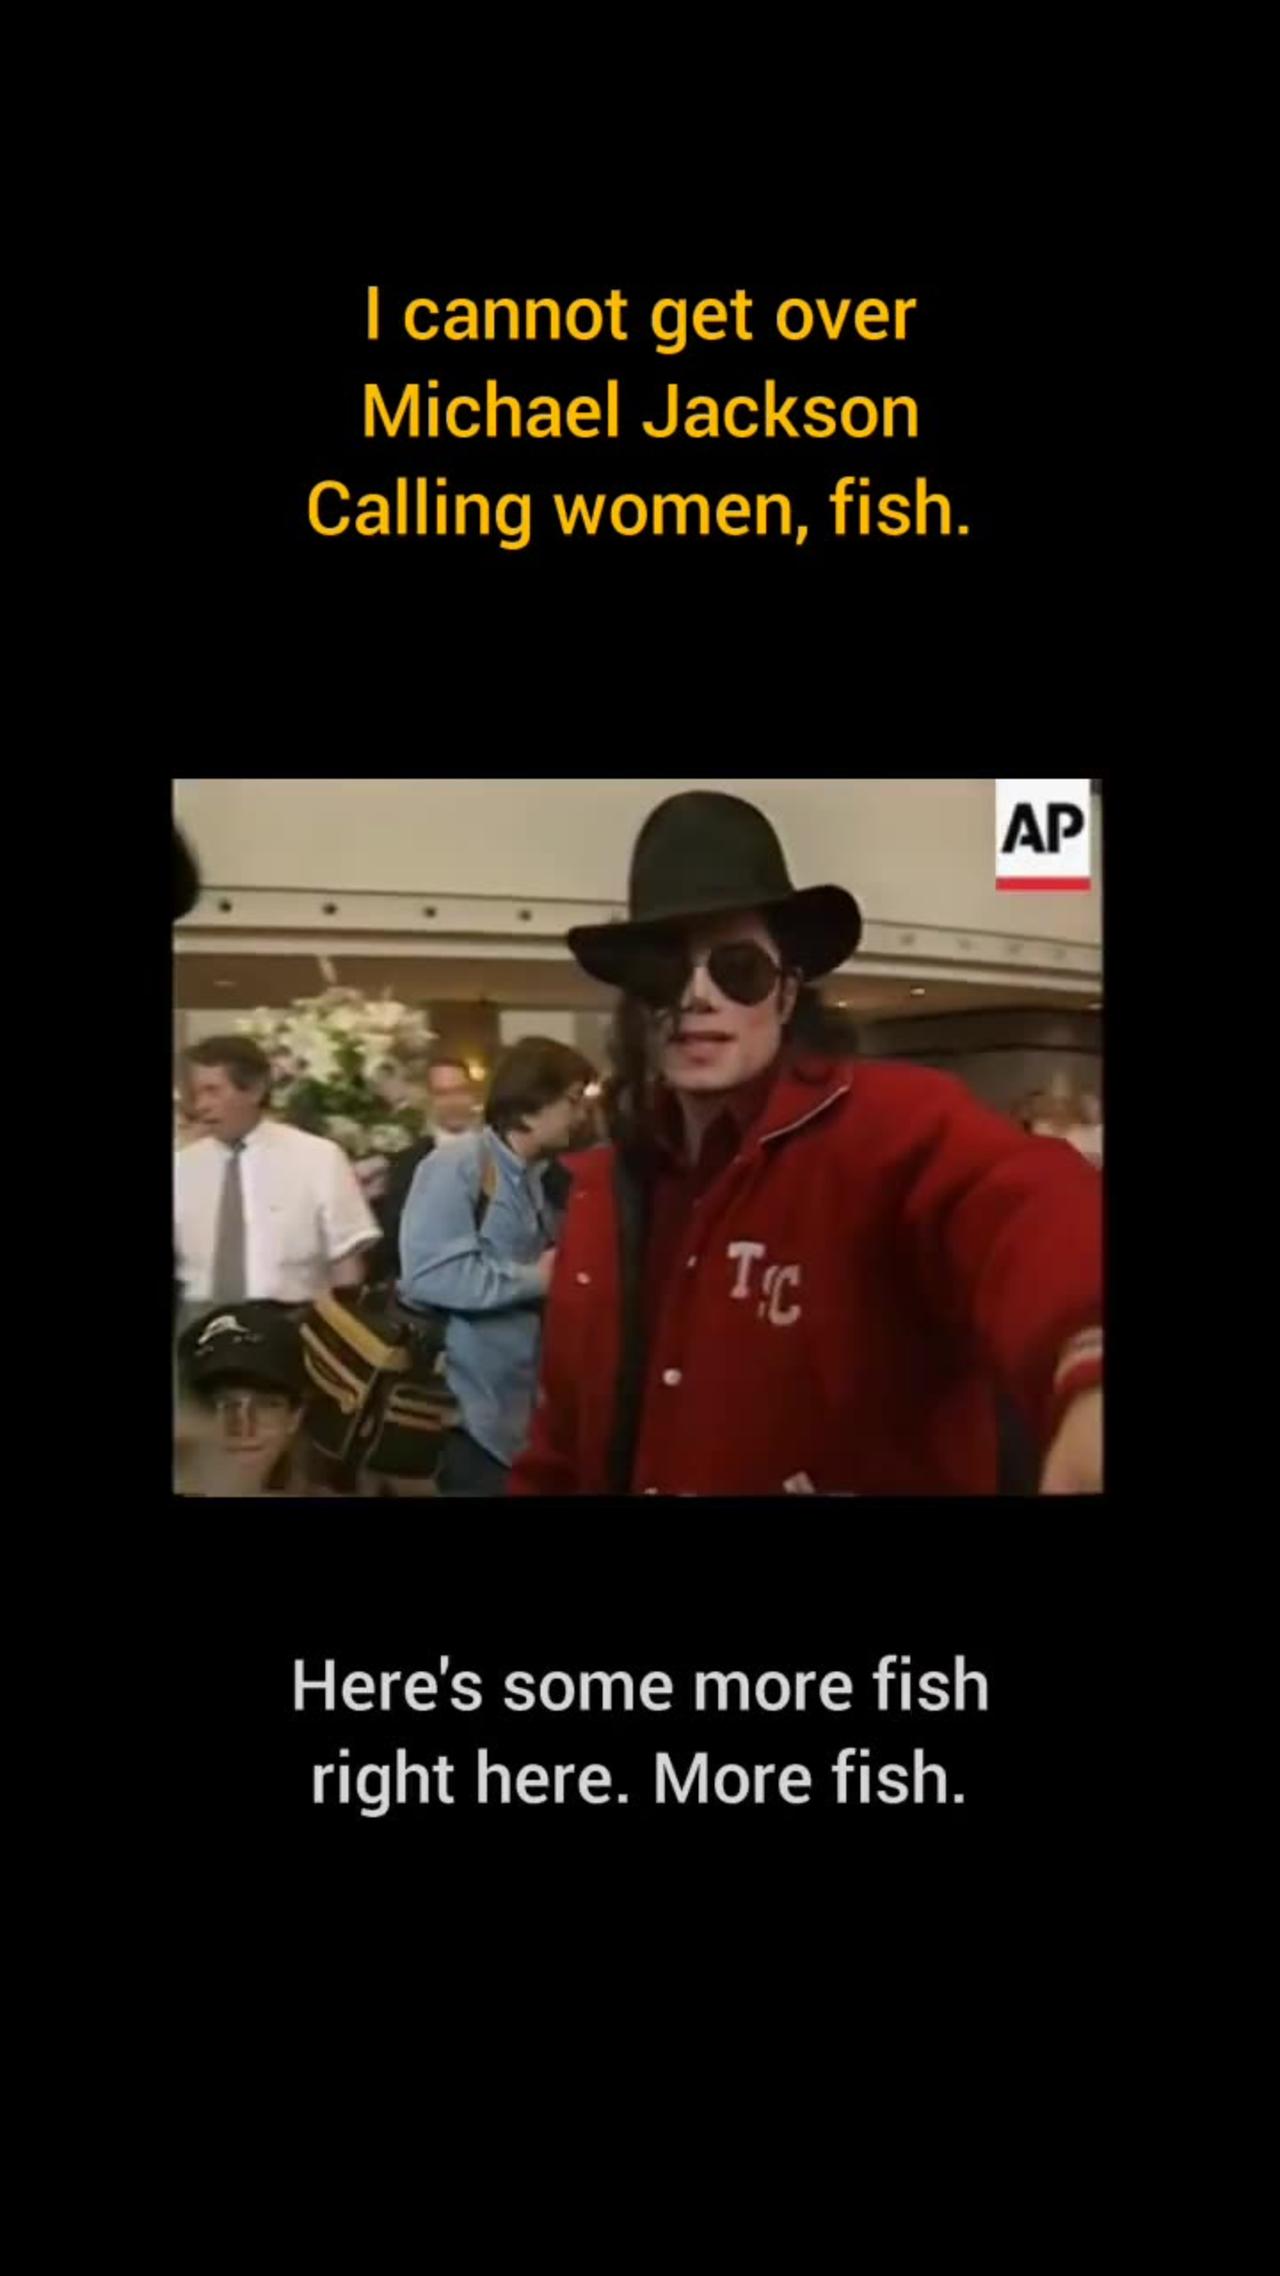 Michael Jackson Calling Women, "Fish".